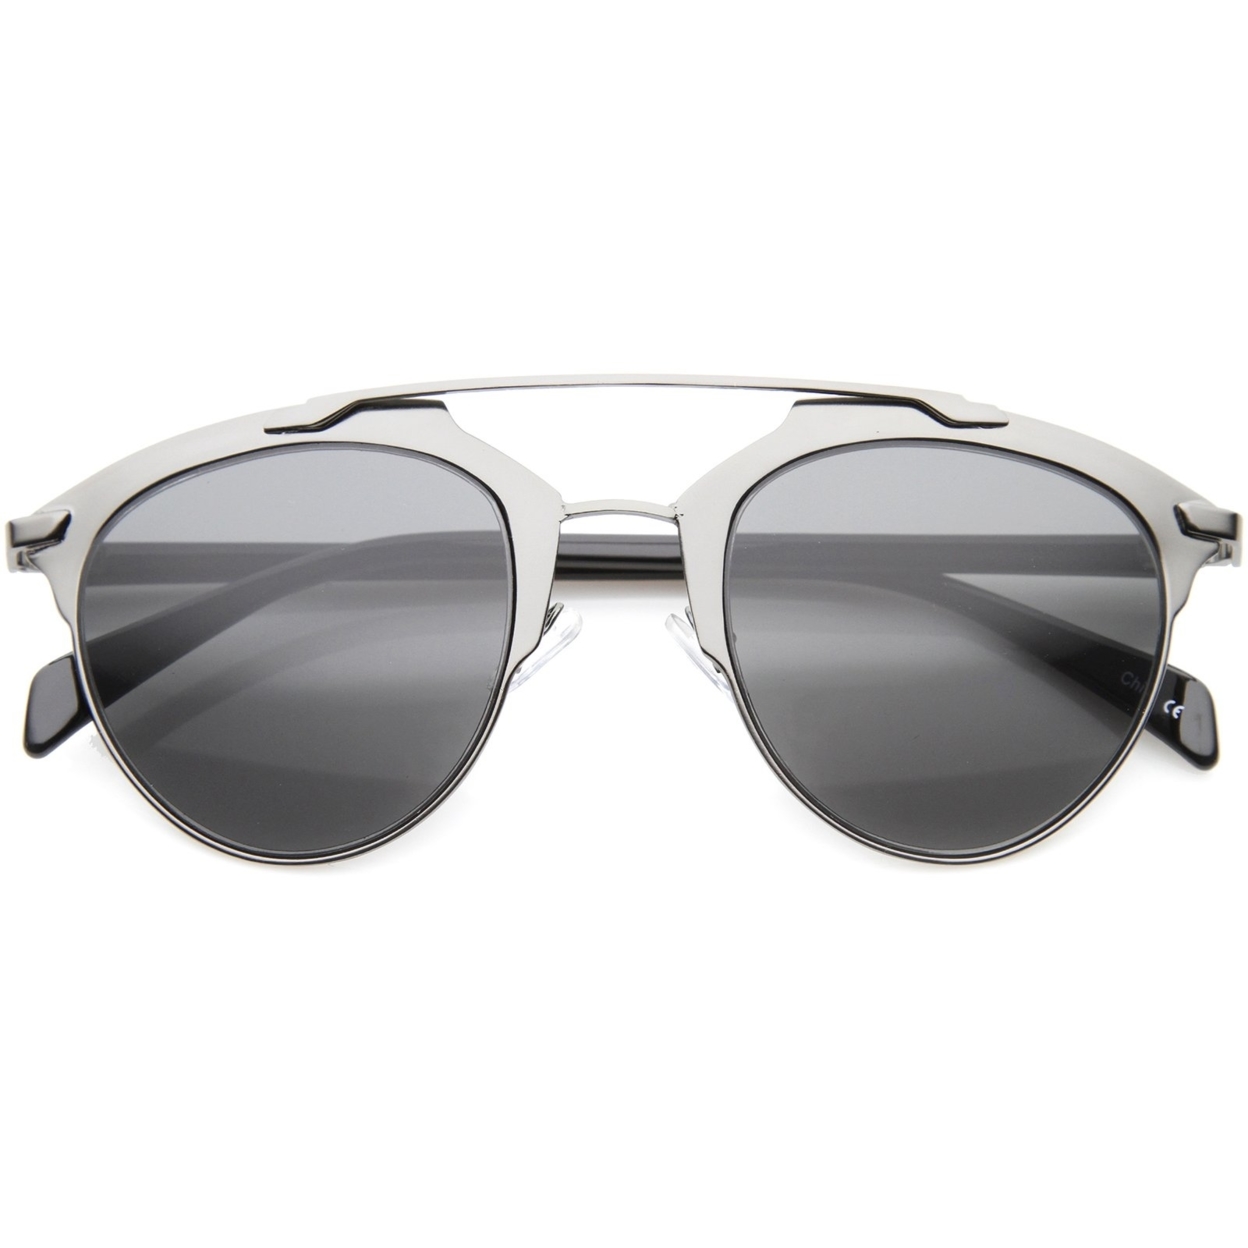 Modern Fashion Metallic Frame Double Bridge Pantos Aviator Sunglasses 50mm - Gold / Amber